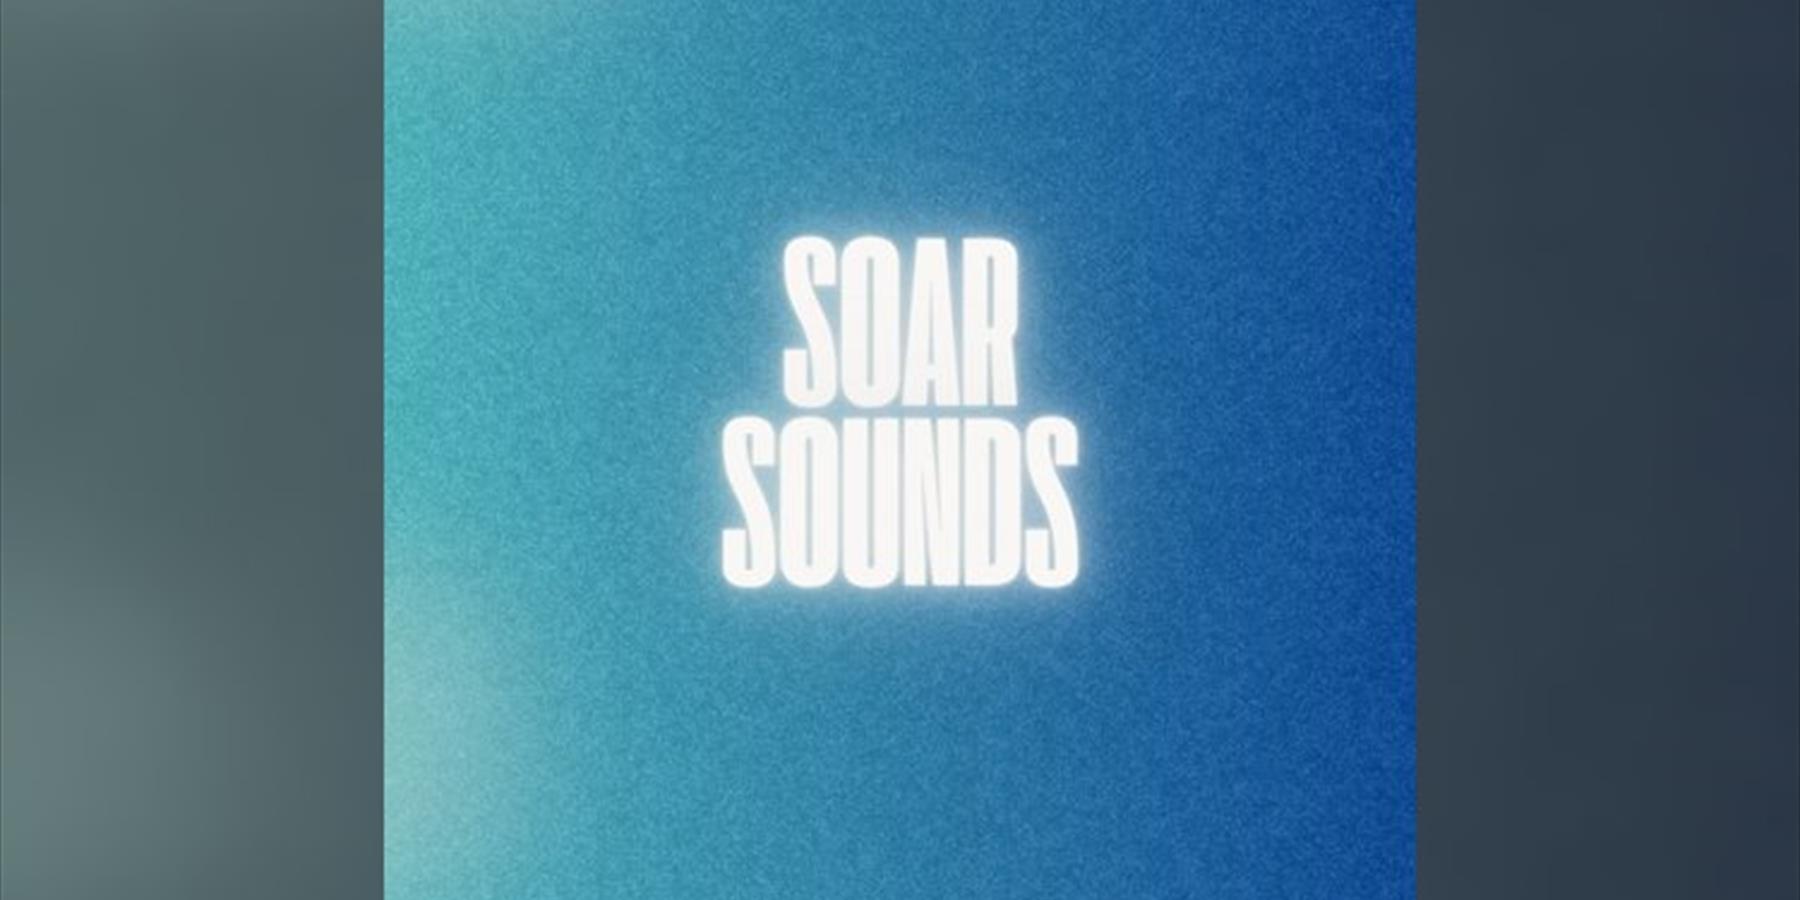 Soar Sounds Presents...